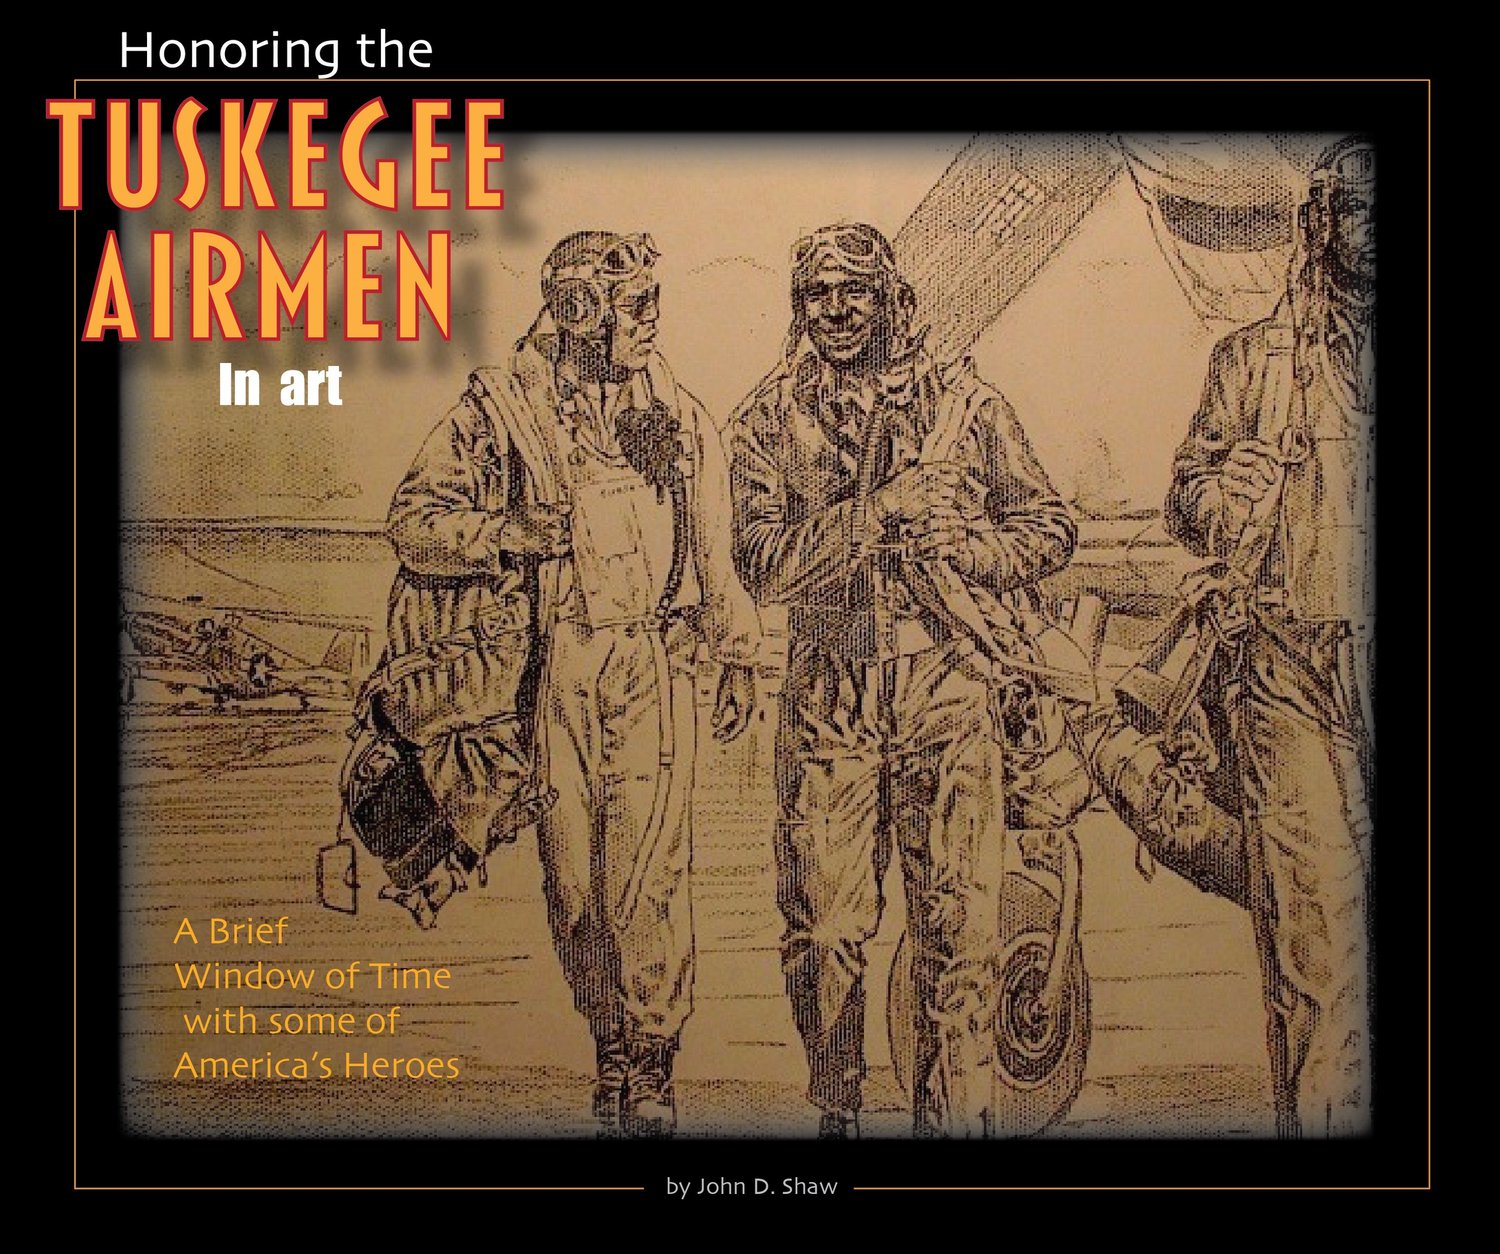 The tuskegee airmen of wwll â john shaw art